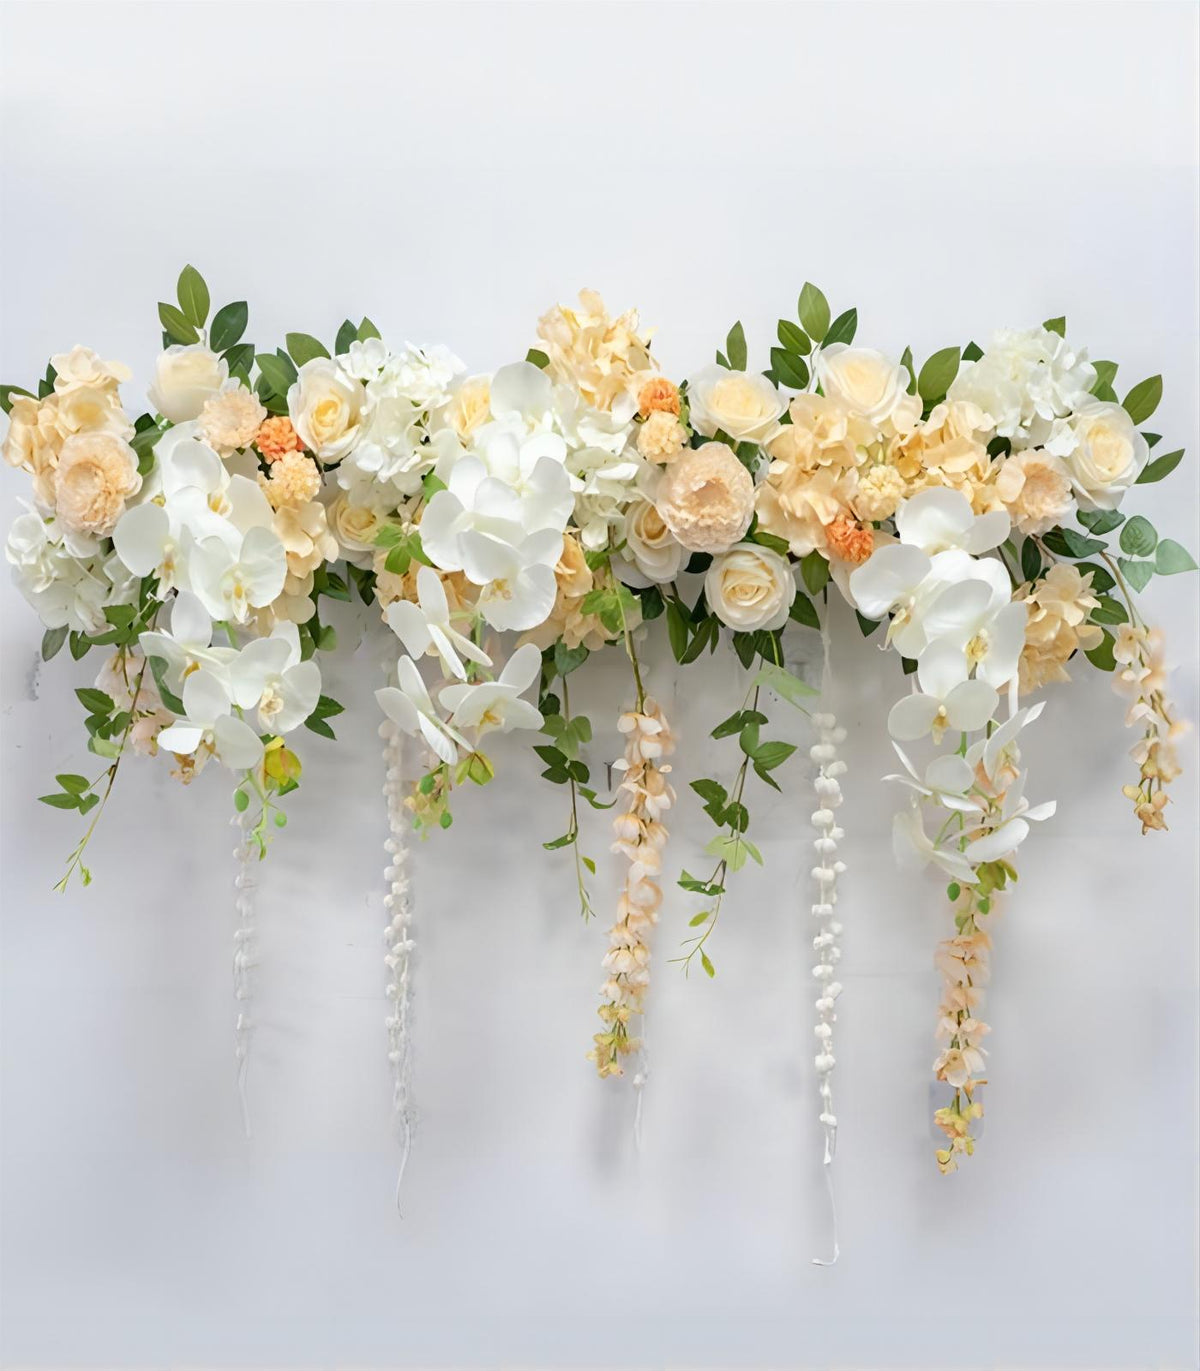 65*100cm Champagne White Rose Hydrangea Artificial Flower Wedding Party Birthday Backdrop Decor CH9666-3